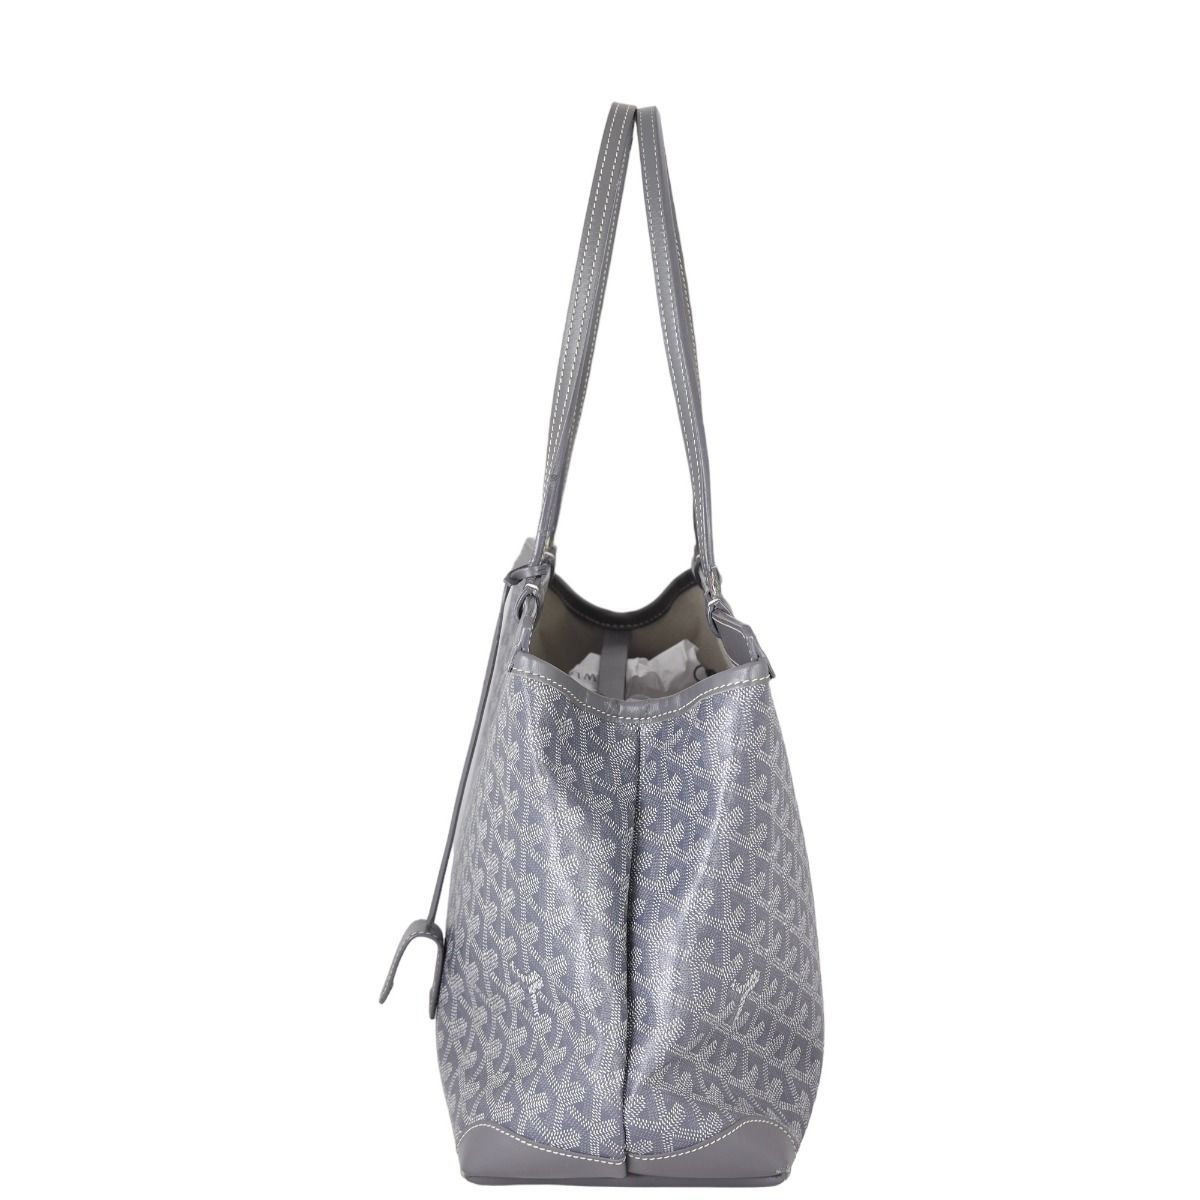 Goyard Bellechasse Bag in Grey